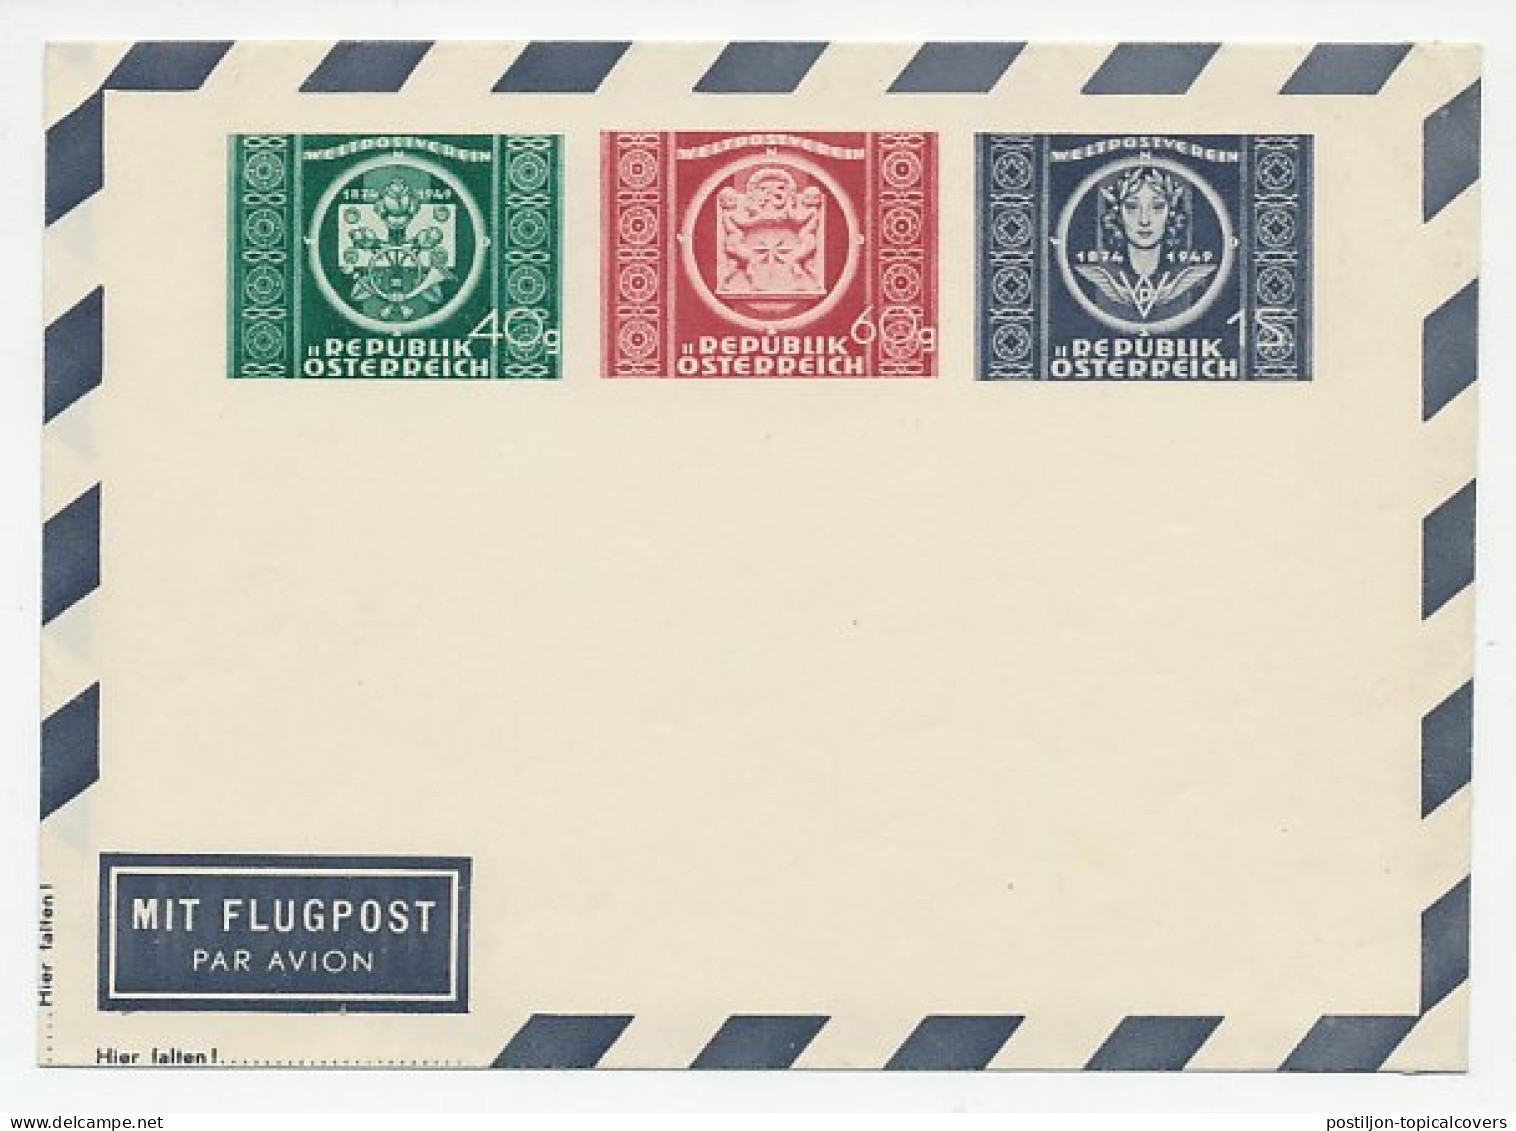 Postal Stationery Austria 1949 Universal Postal Union 1874 - 1949 - UPU (Universal Postal Union)